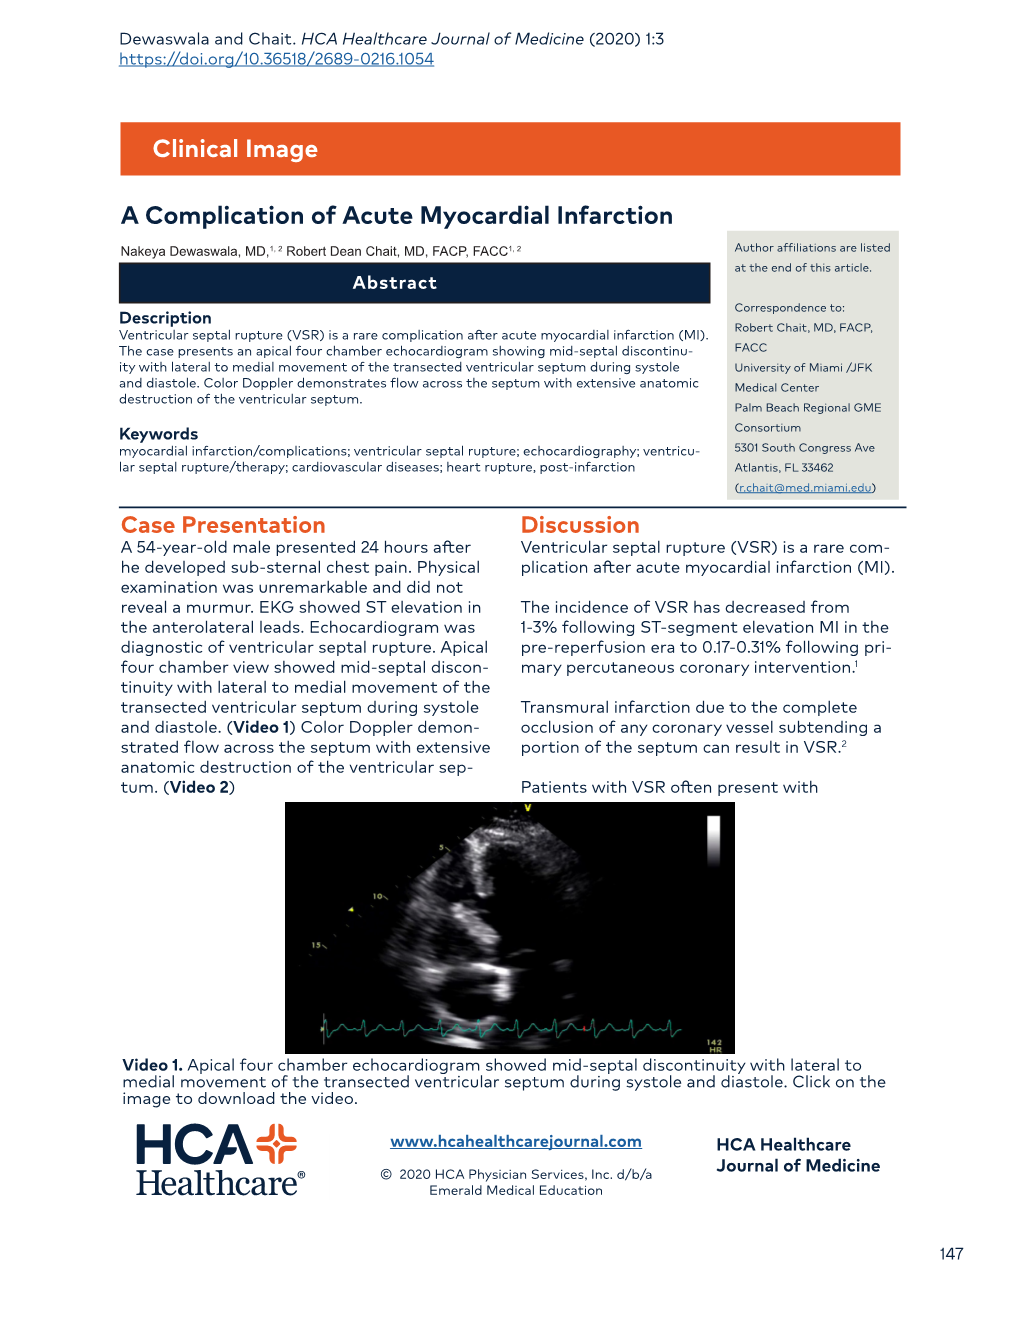 A Complication of Acute Myocardial Infarction